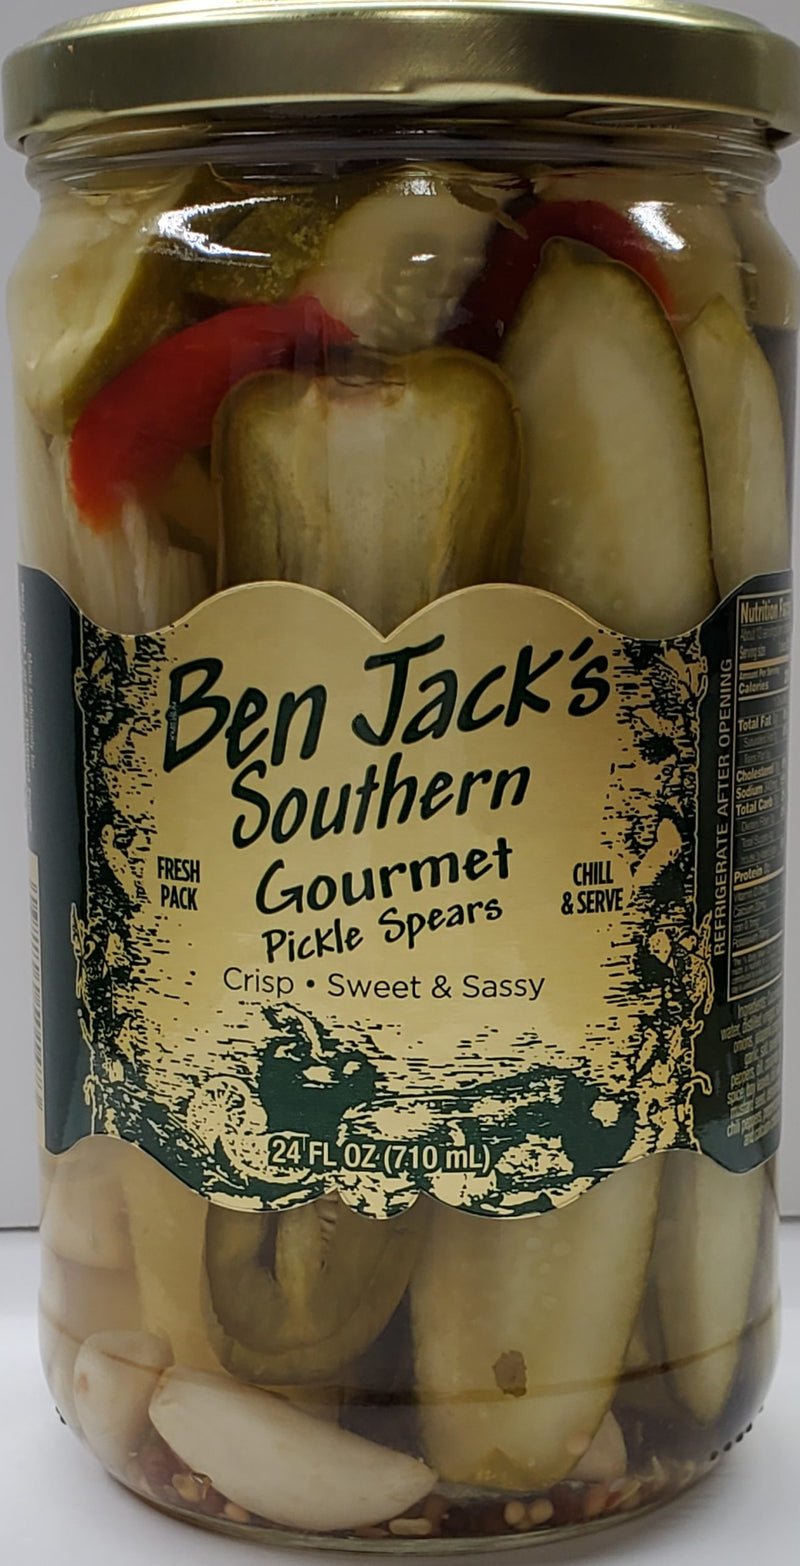 Ben Jack Larado's Southern Gourmet Pickle Spears